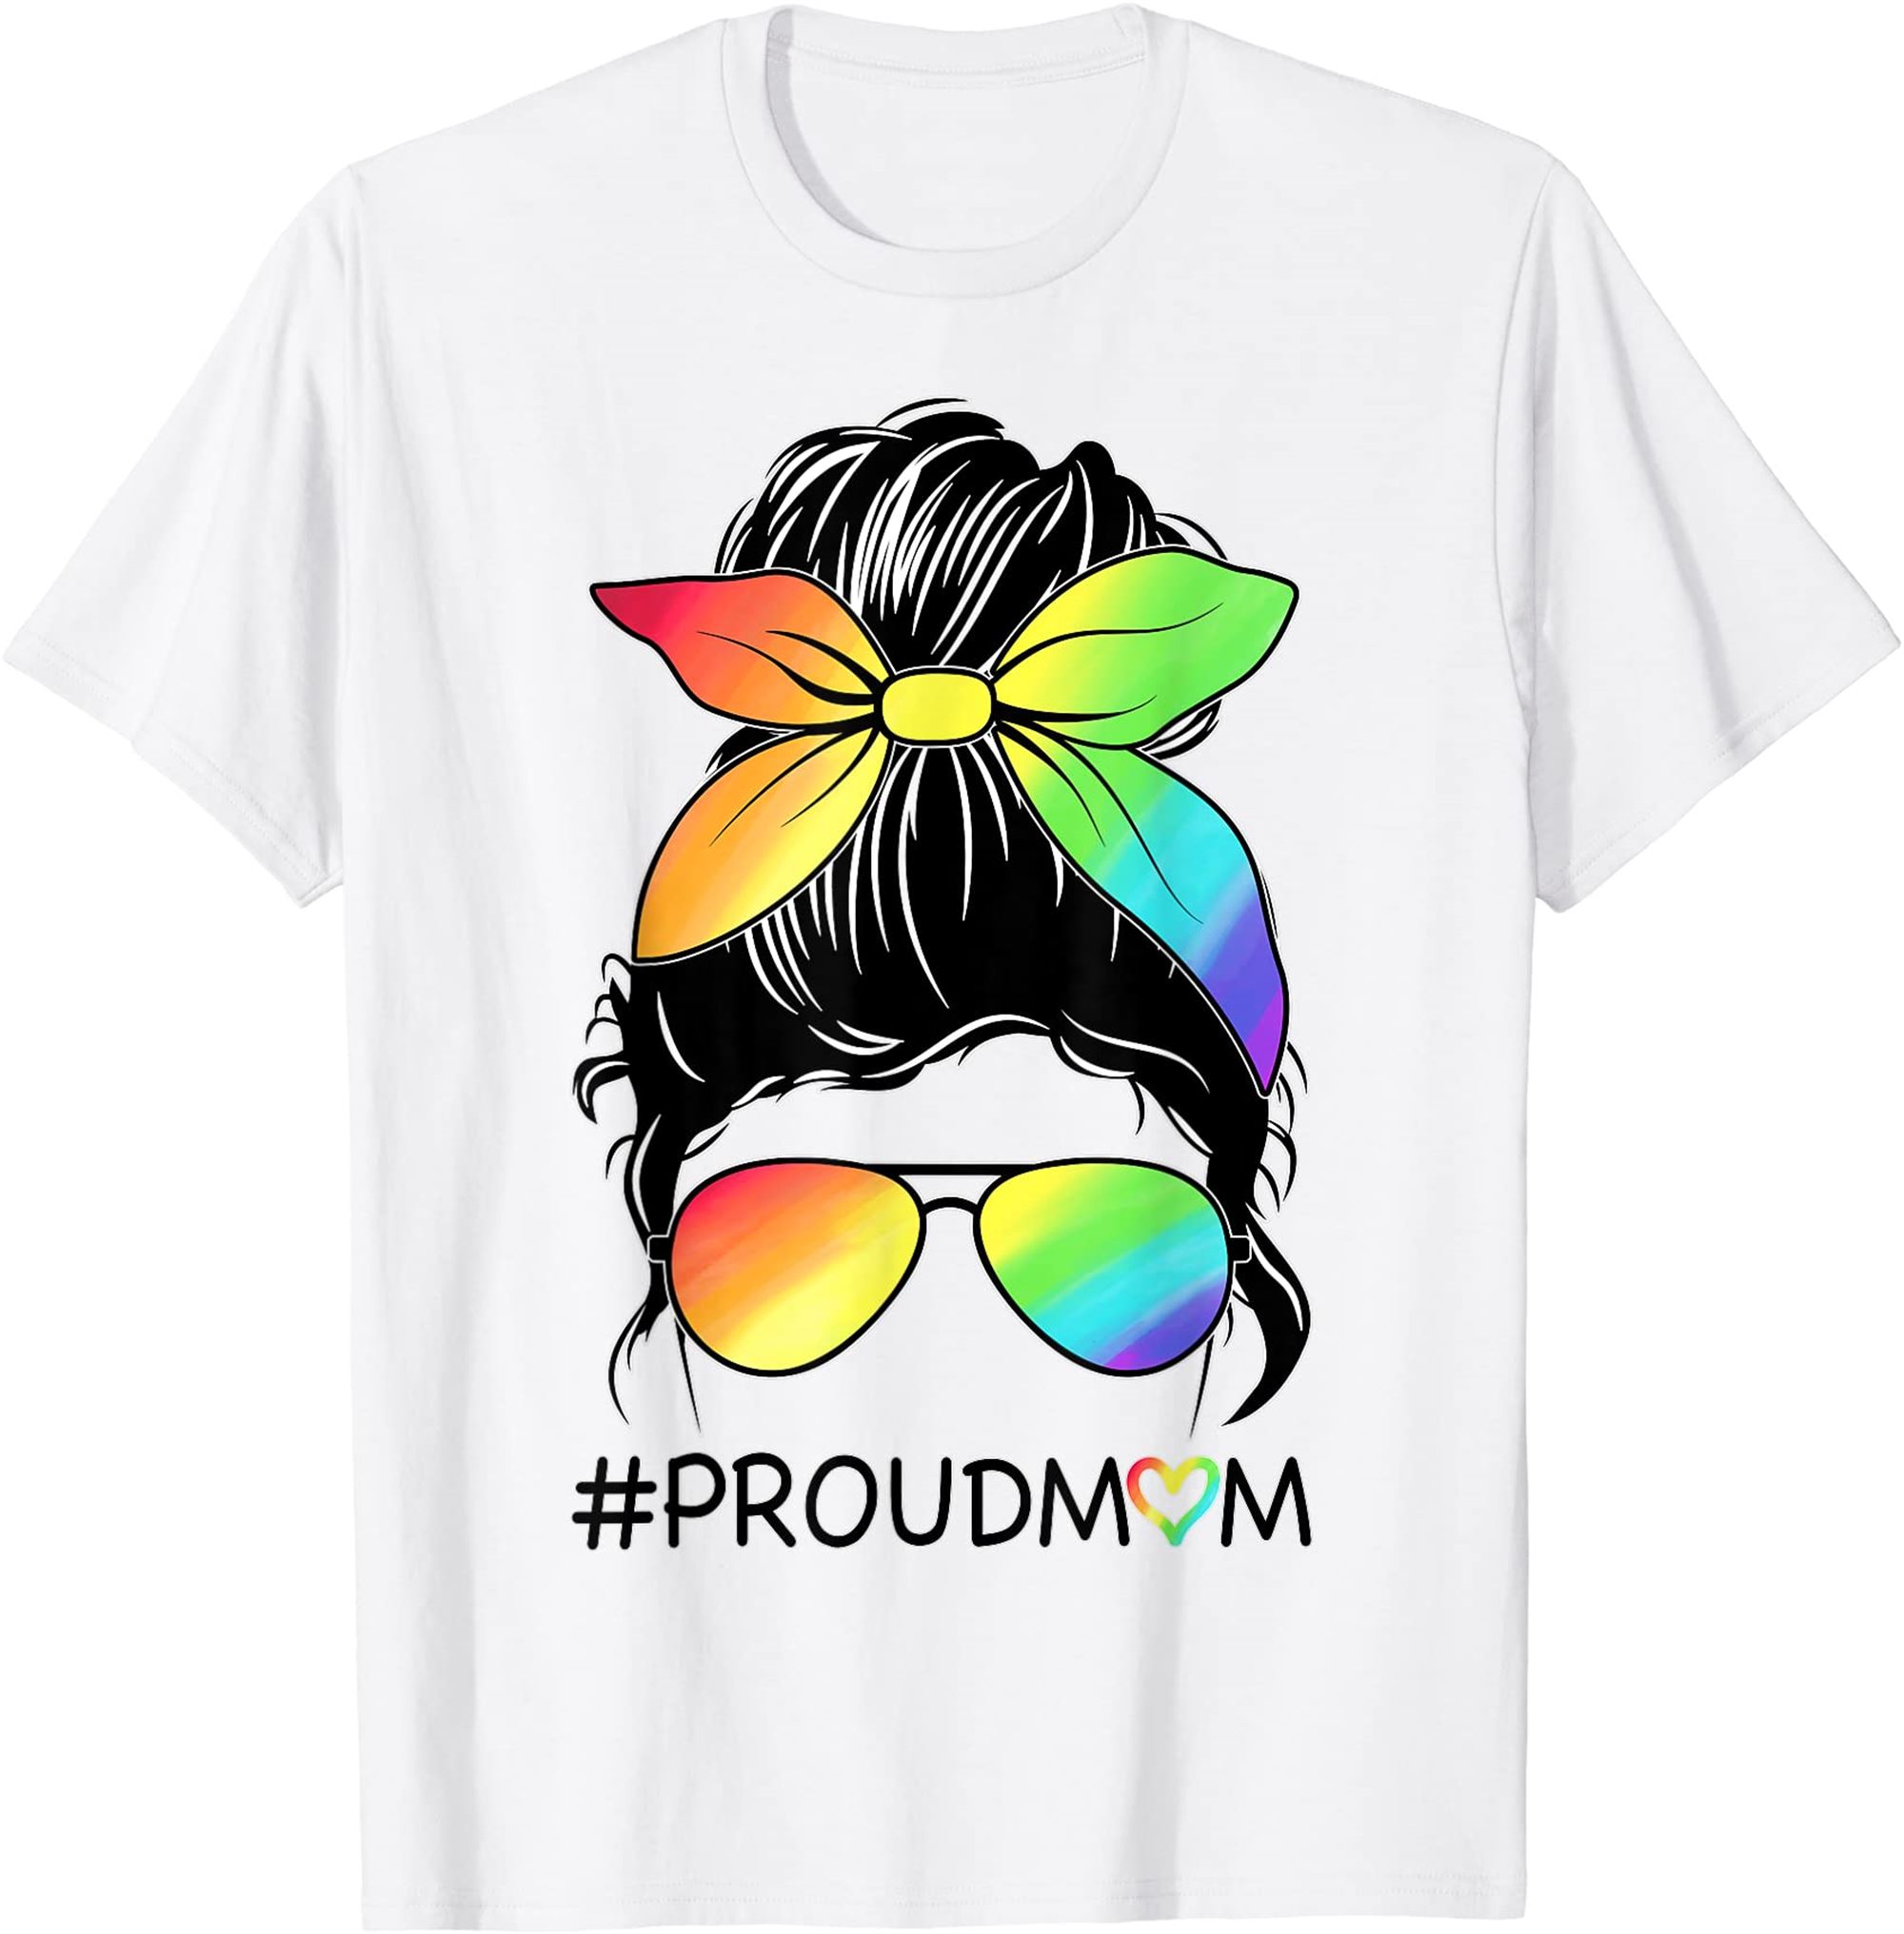 Proud Mom Lgbt Gay Pride Support Lgbtq Les Bi Trans Parade T-shirt Plus Size Up To 5xl